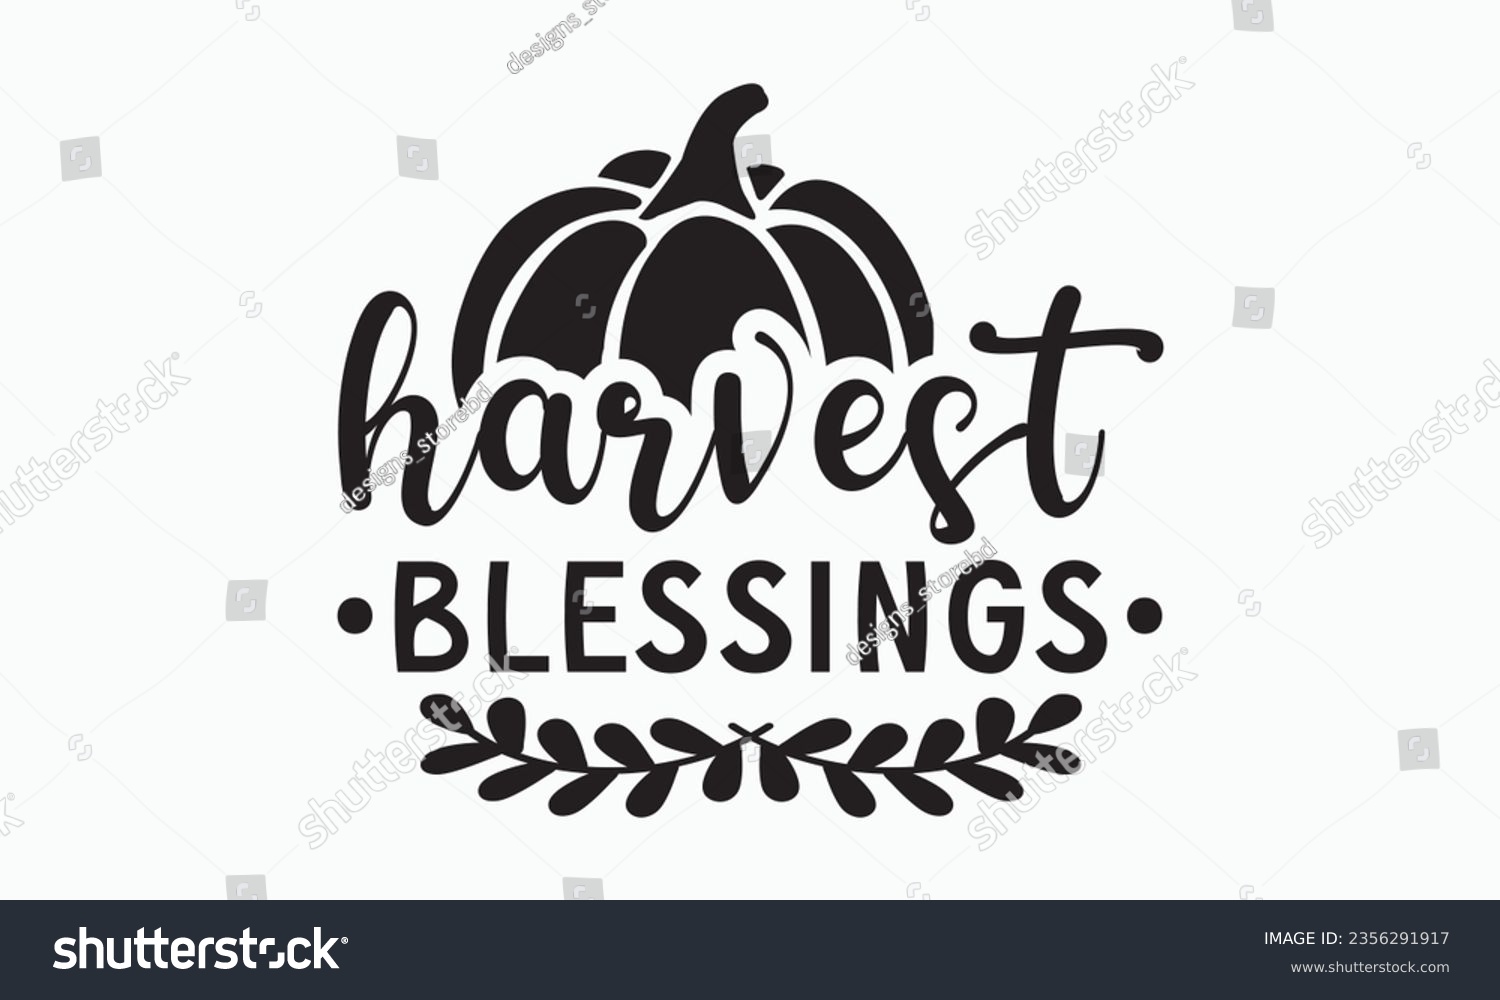 SVG of Harvest blessings svg,Thanksgiving t-shirt design, Funny Fall svg,  EPS, autumn bundle, Pumpkin, Handmade calligraphy vector illustration graphic, Hand written vector sign, Cut File Cricut, Silhouette svg